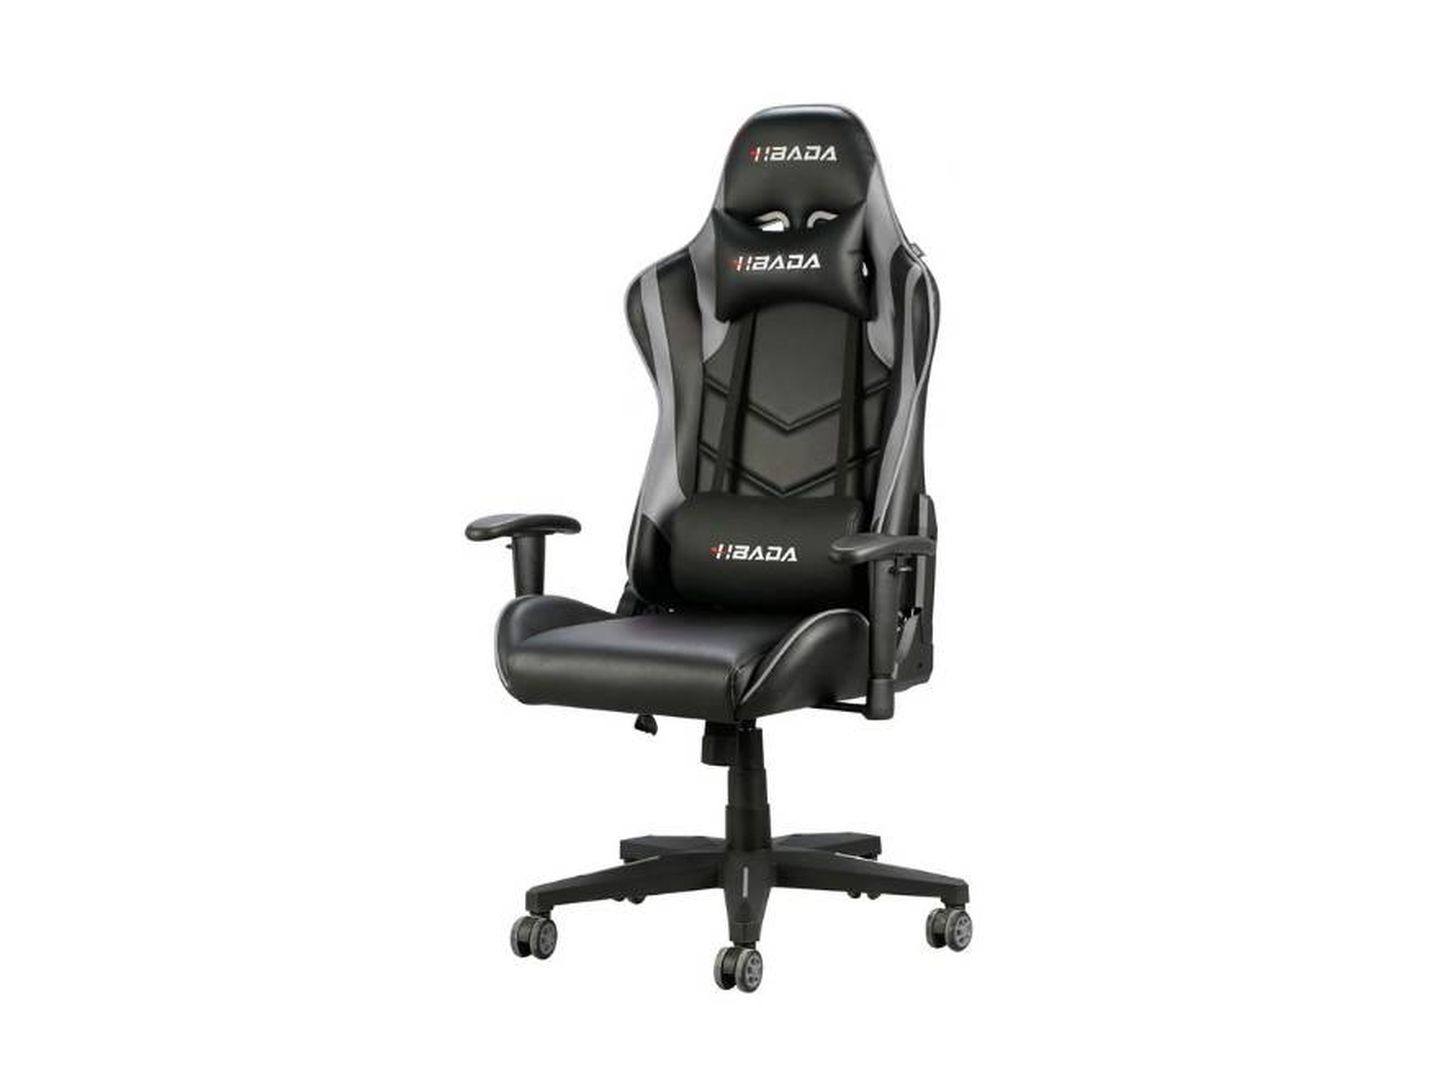 Comodidad garantizada con esta silla gaming barata ideal para